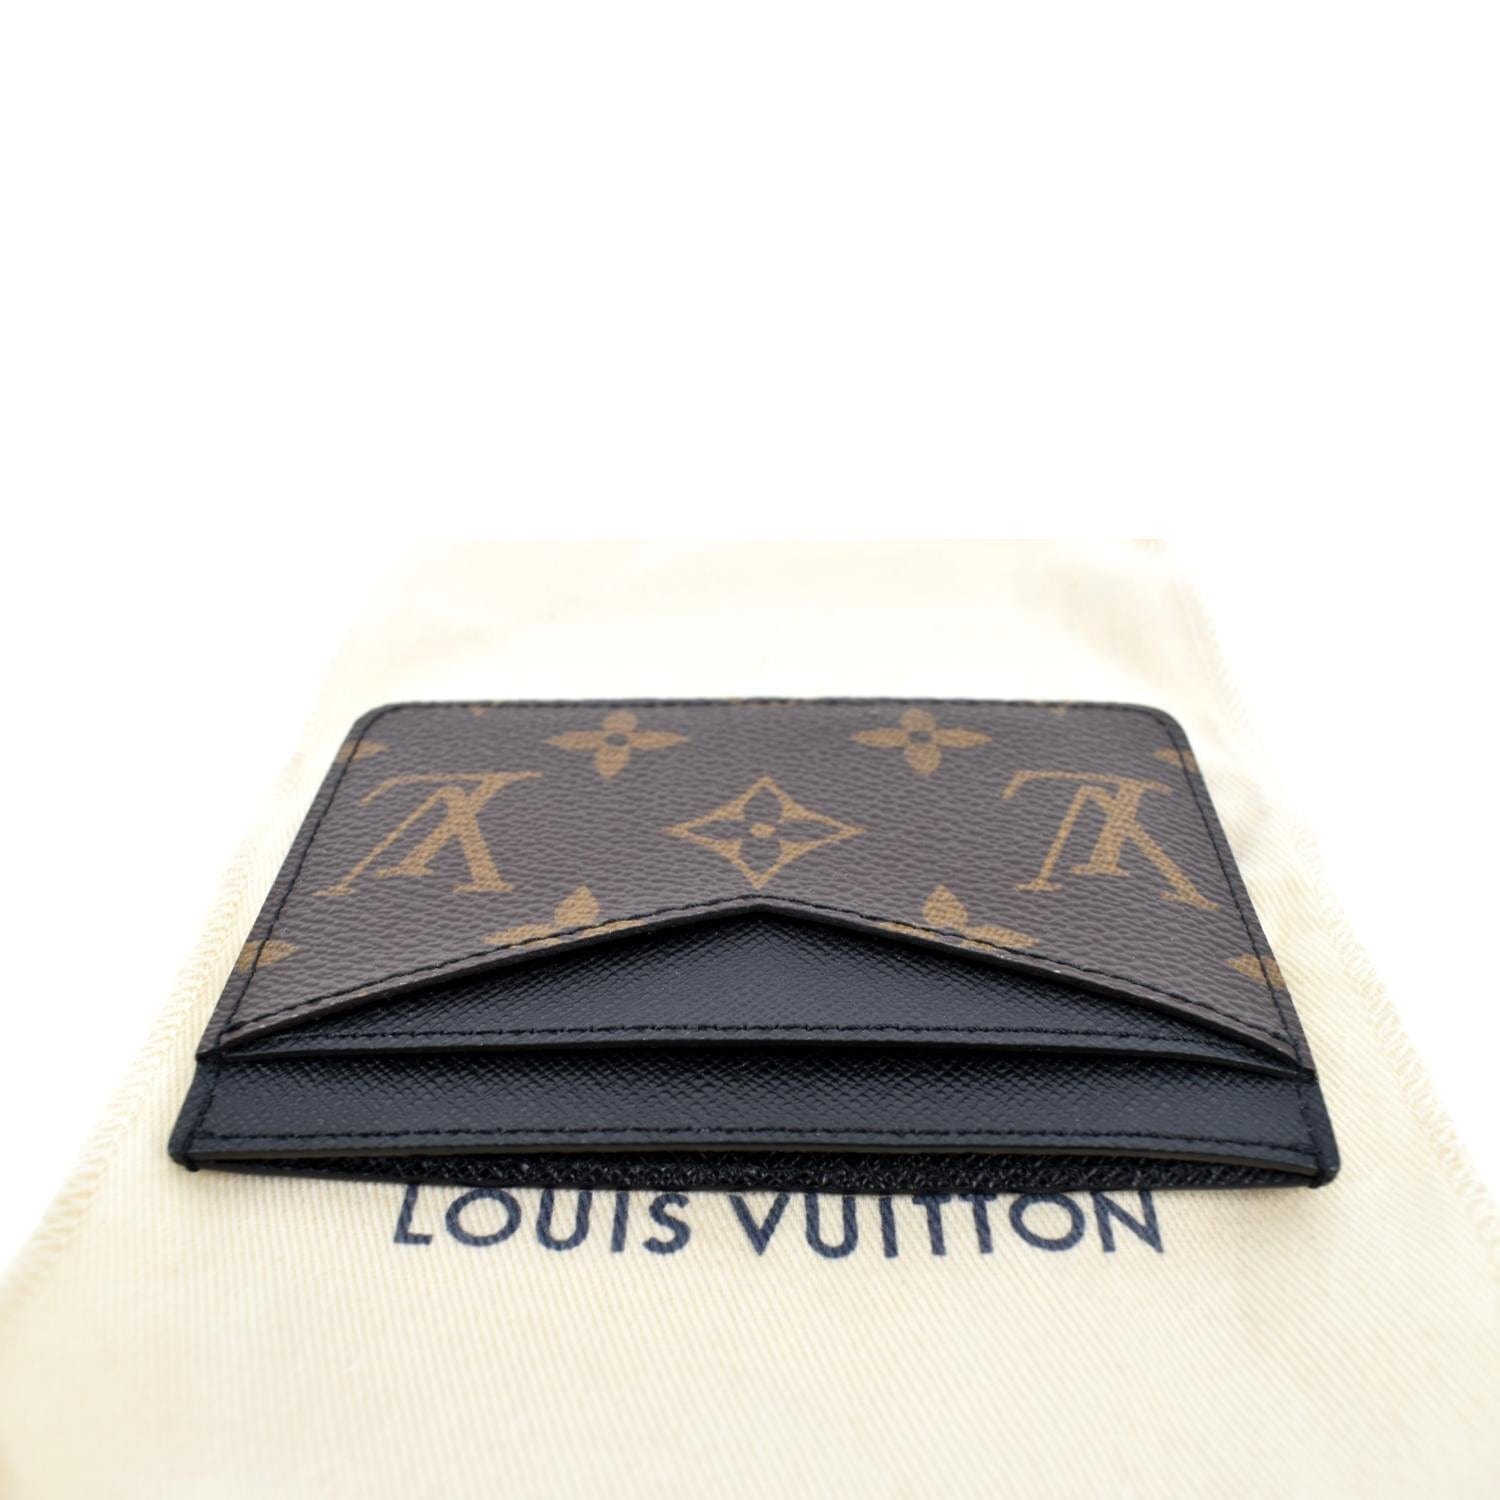 Brown Louis Vuitton Monogram Card Case